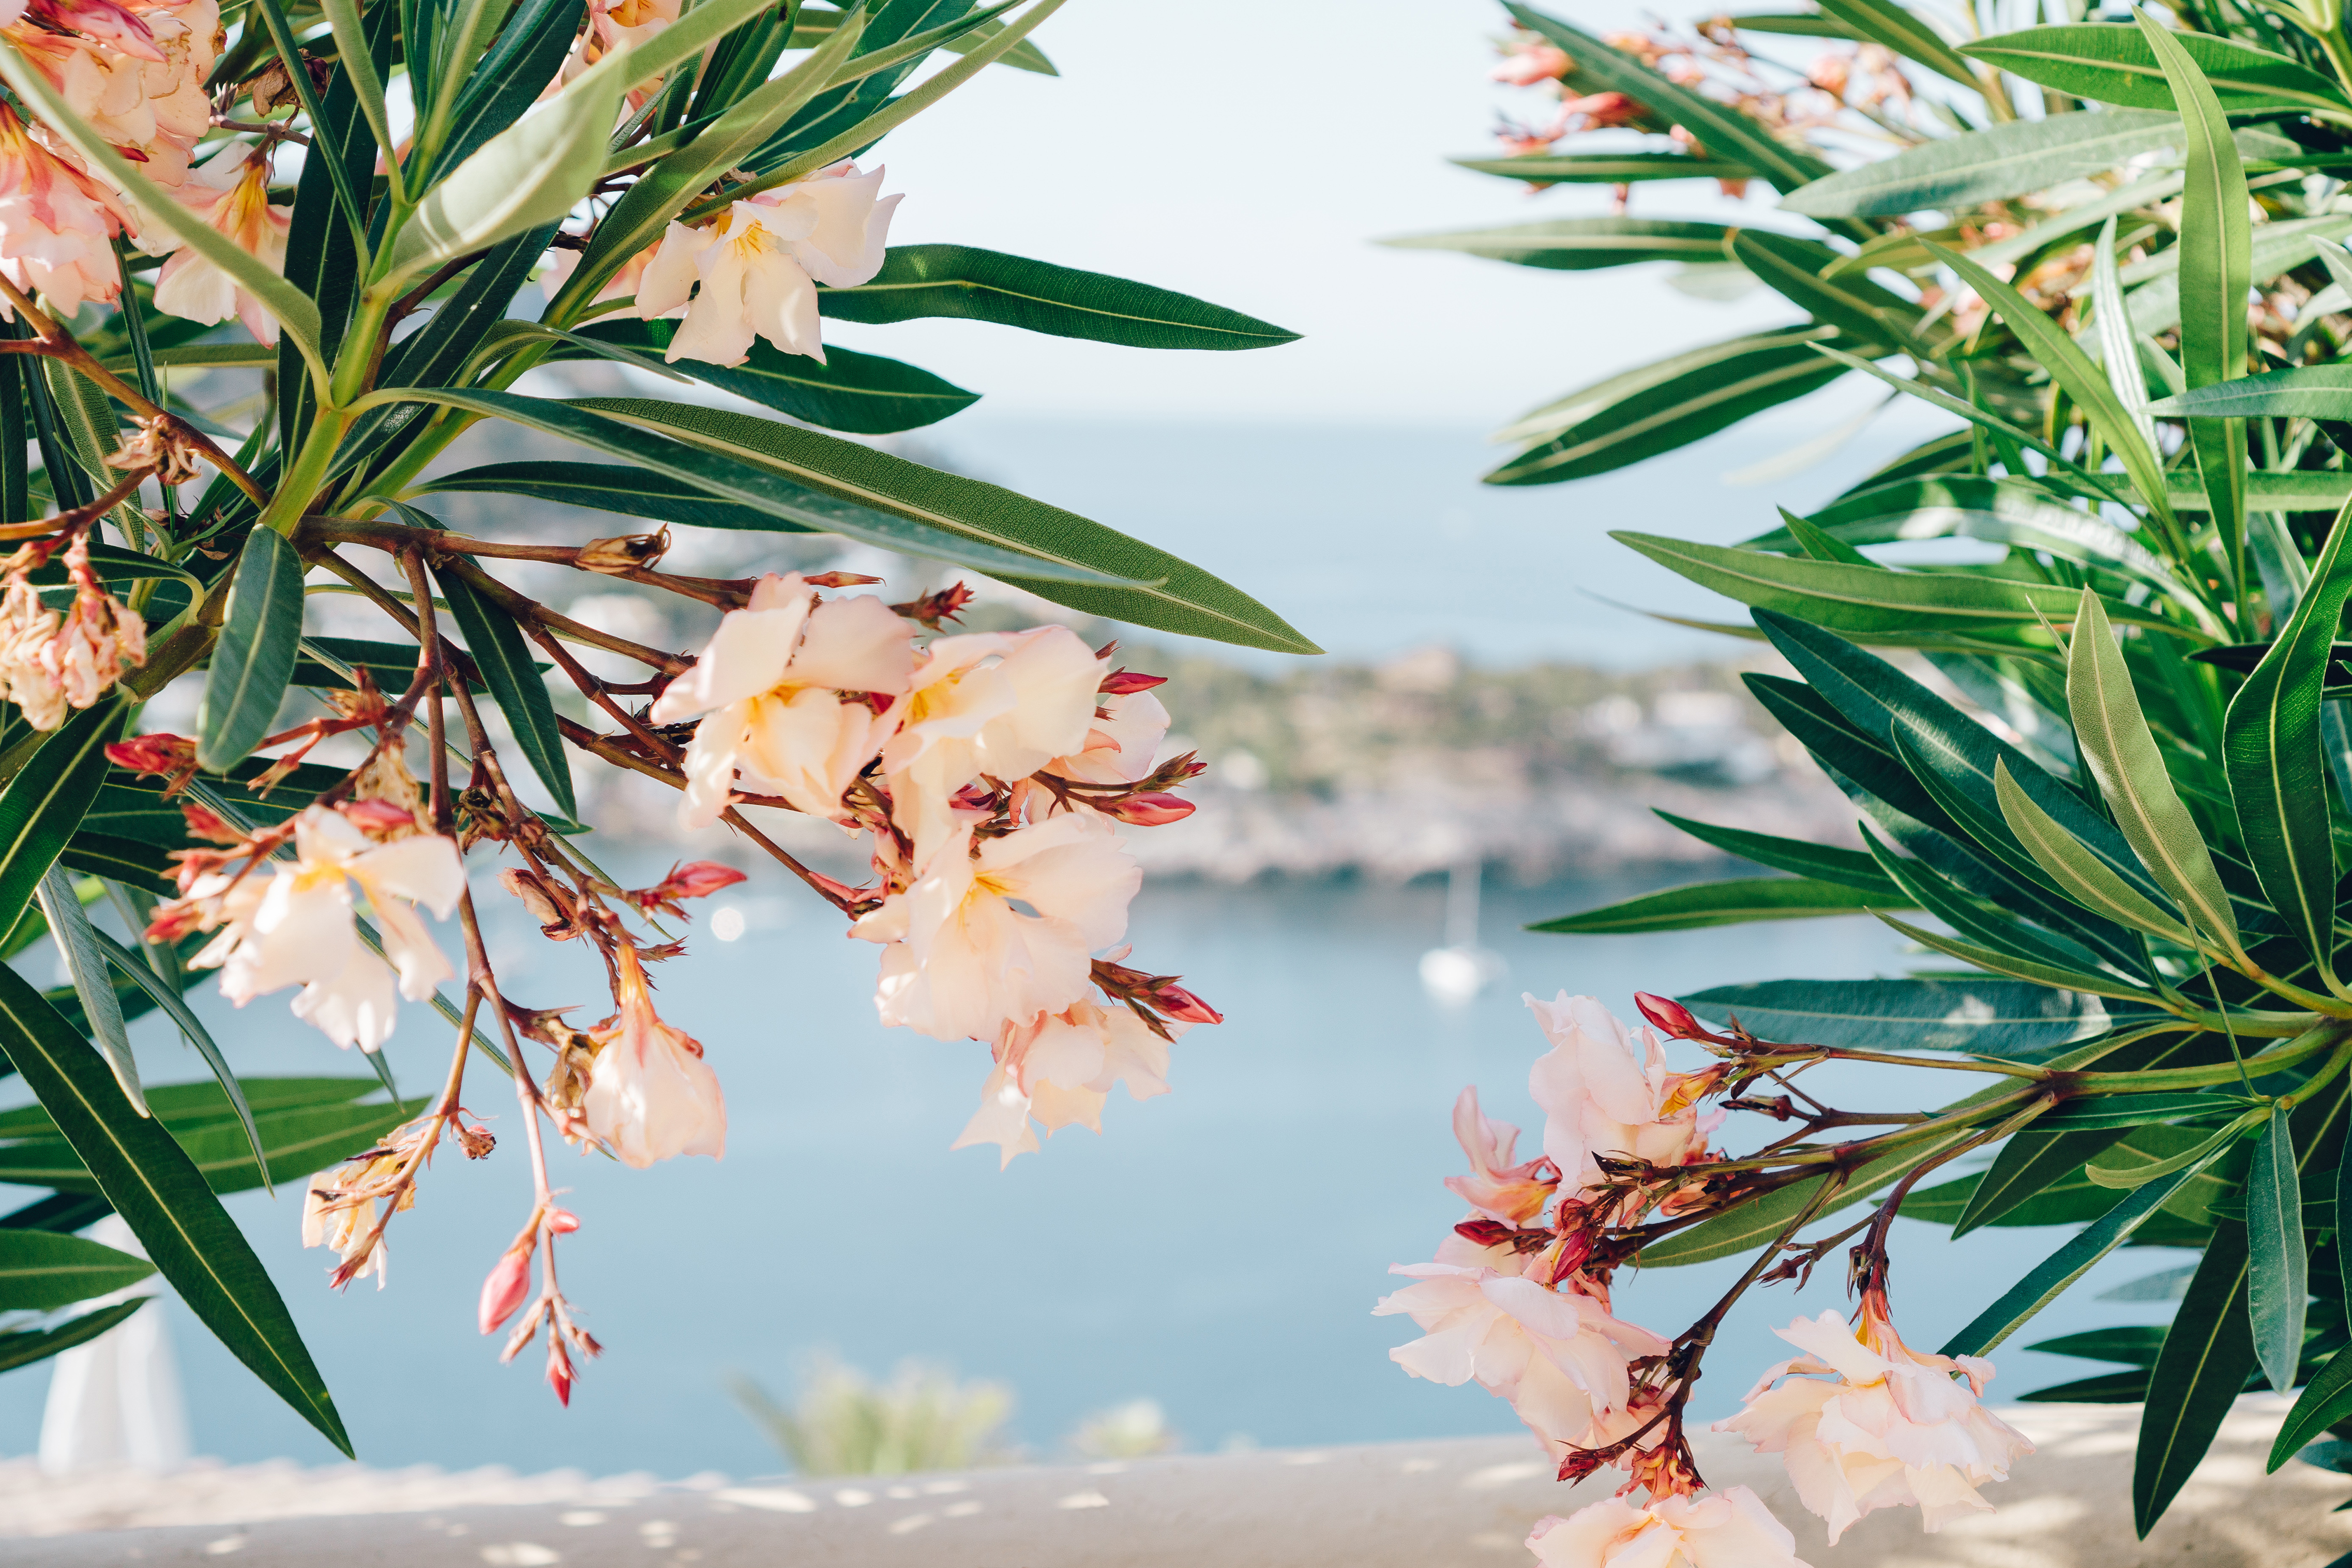 The property market is flourishing: The spring season in Ibiza